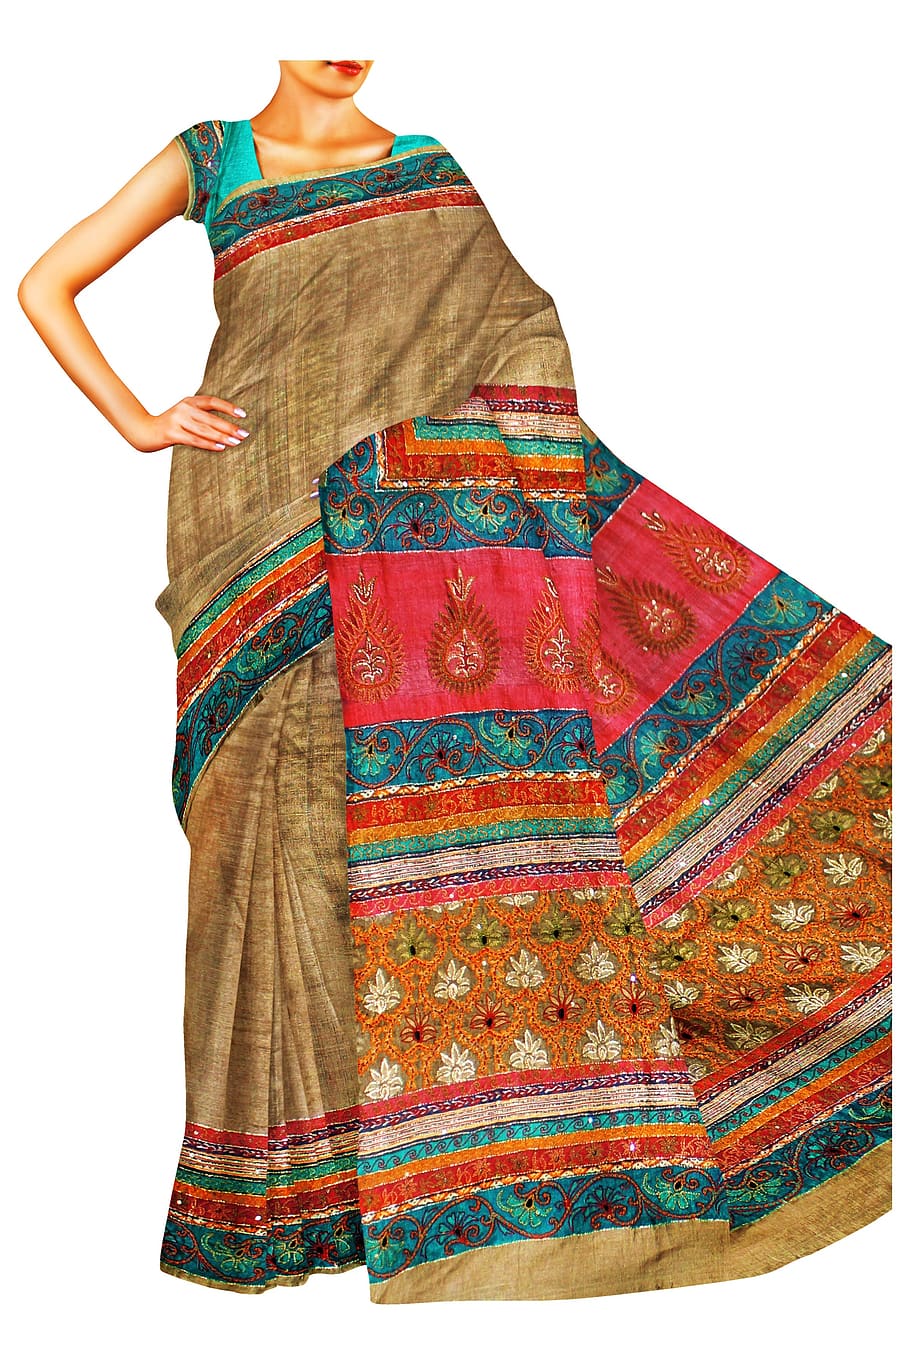 saree, indian, ethnic, clothing, fashion, silk, dress, woman, model, cotton